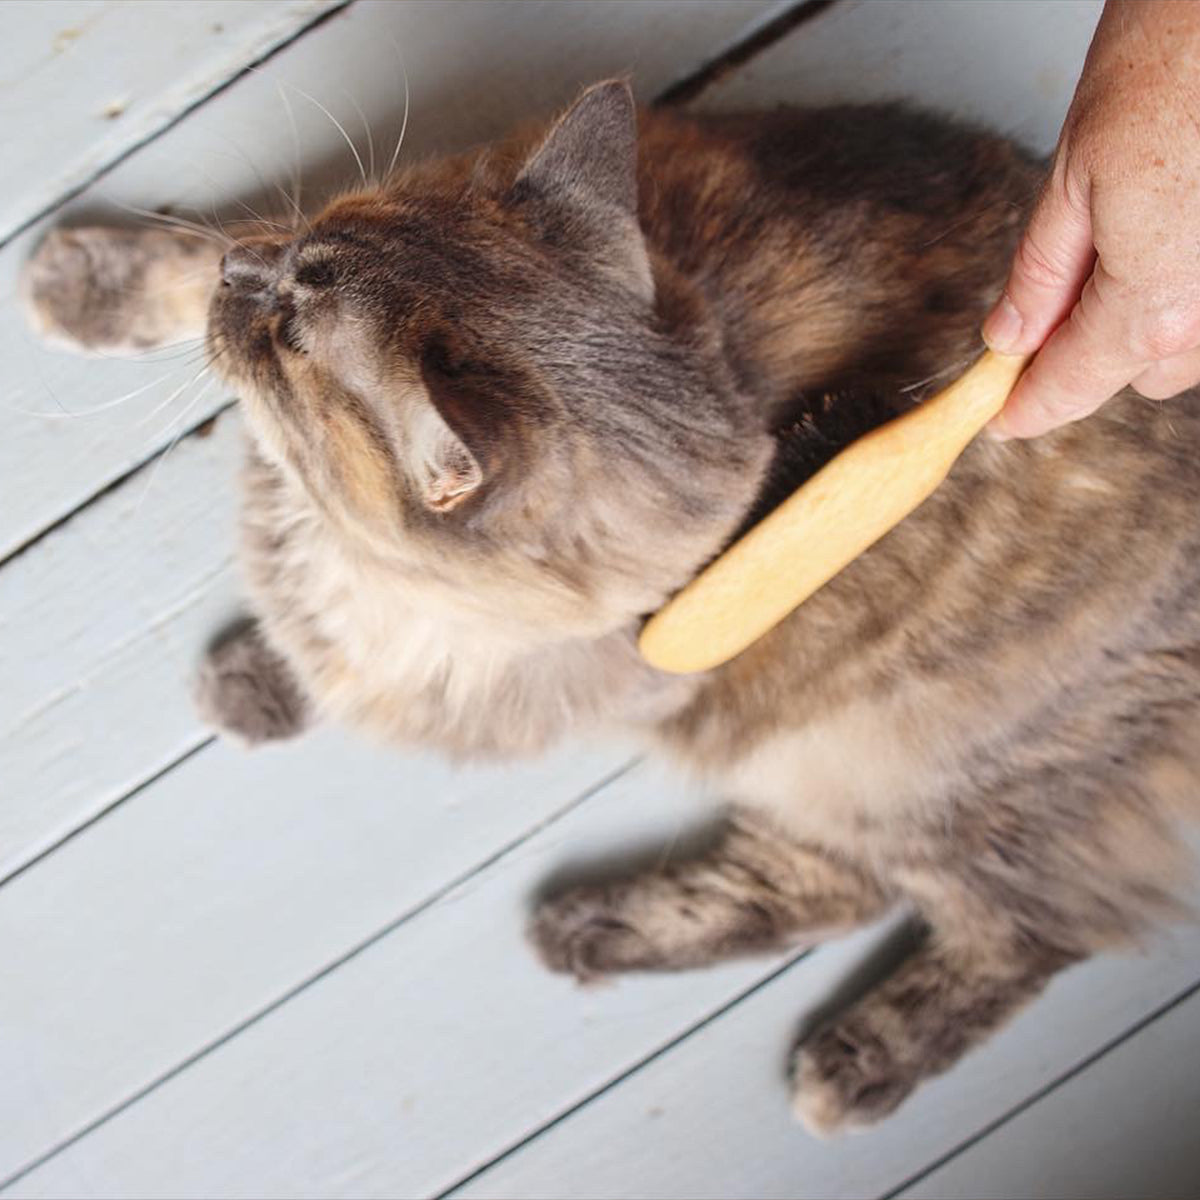 Cat Brush. Made of wood and natural bristle. Iris Hantverk.